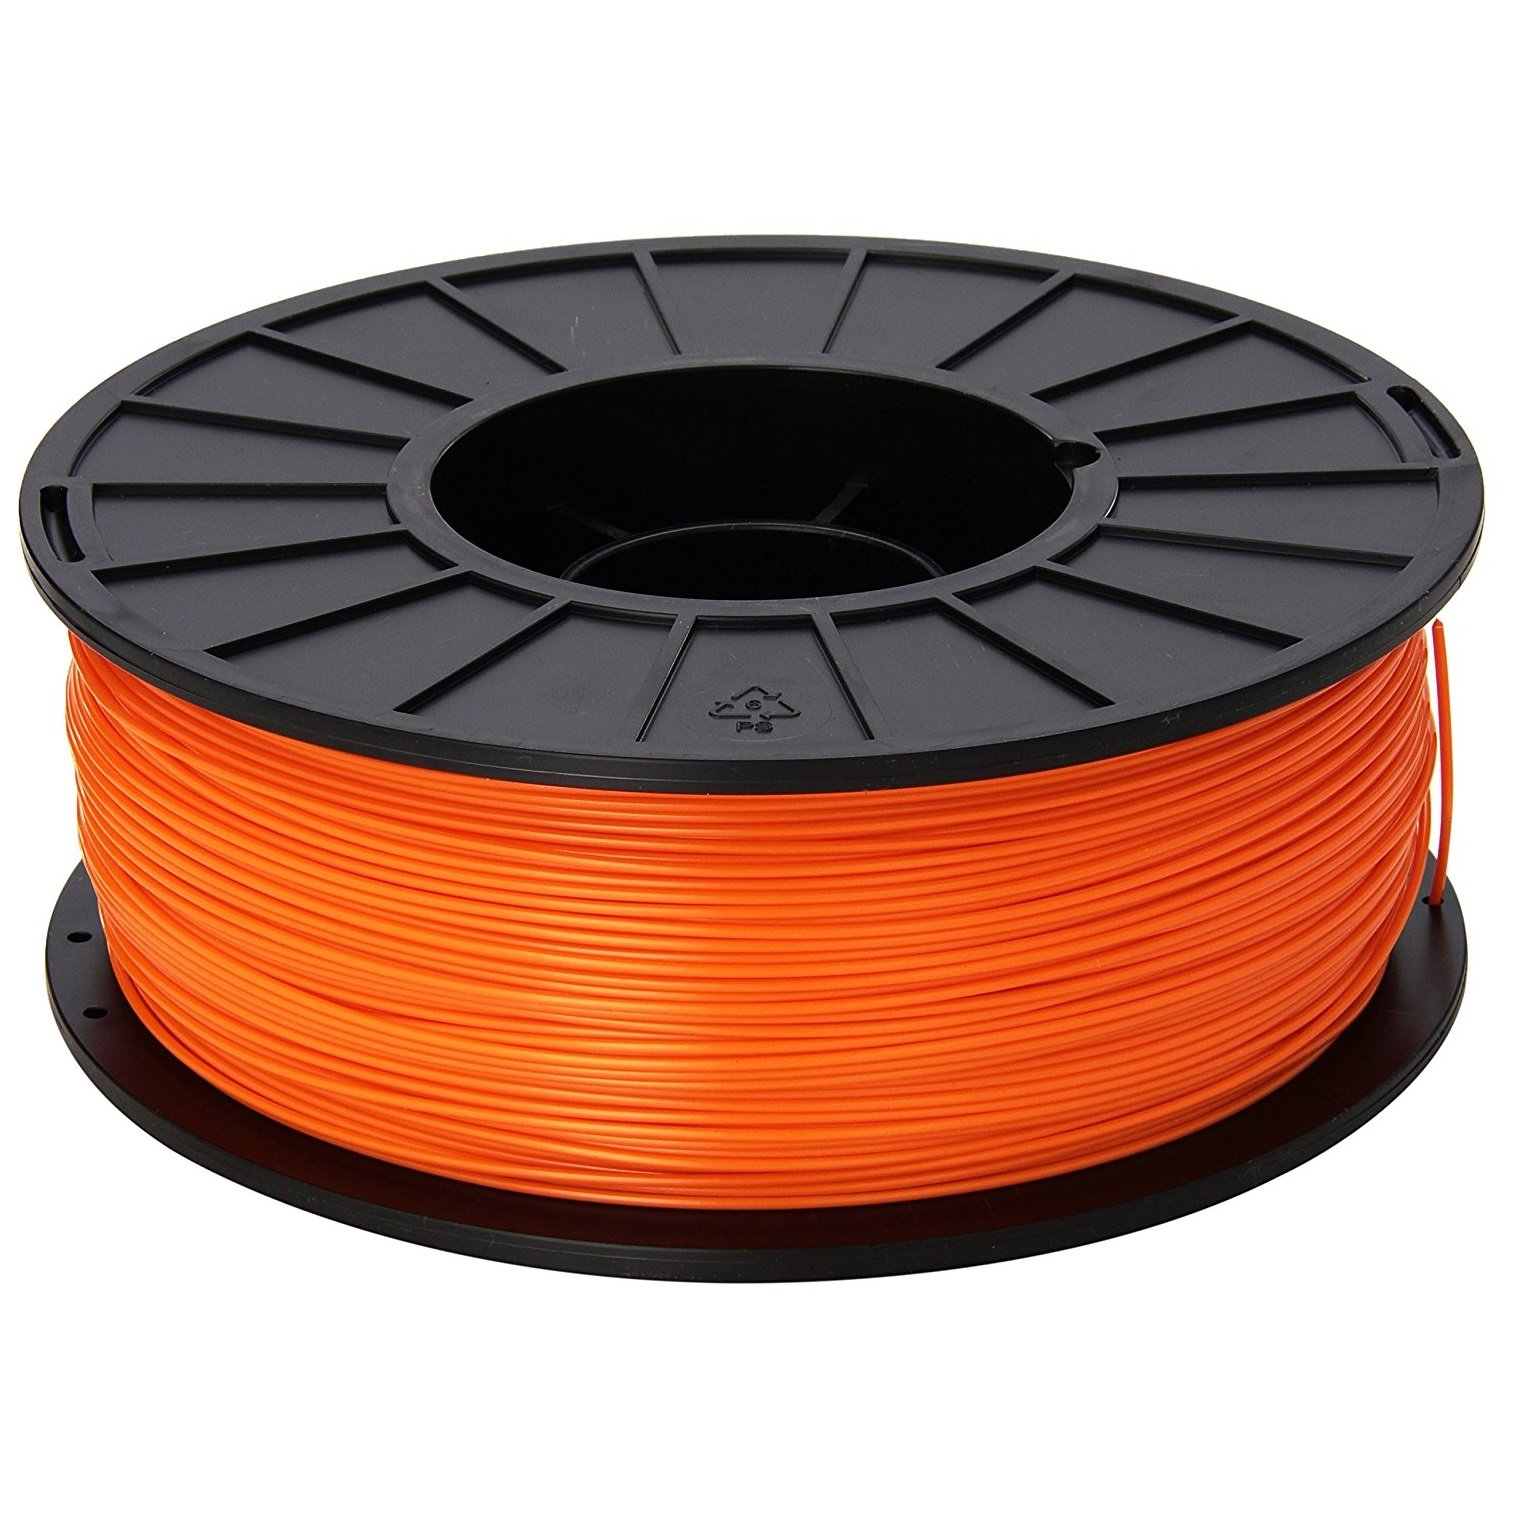 Wanhao Orange Pla 1.75 Mm 1 Kg Filament For 3D Printer – Premium Quality